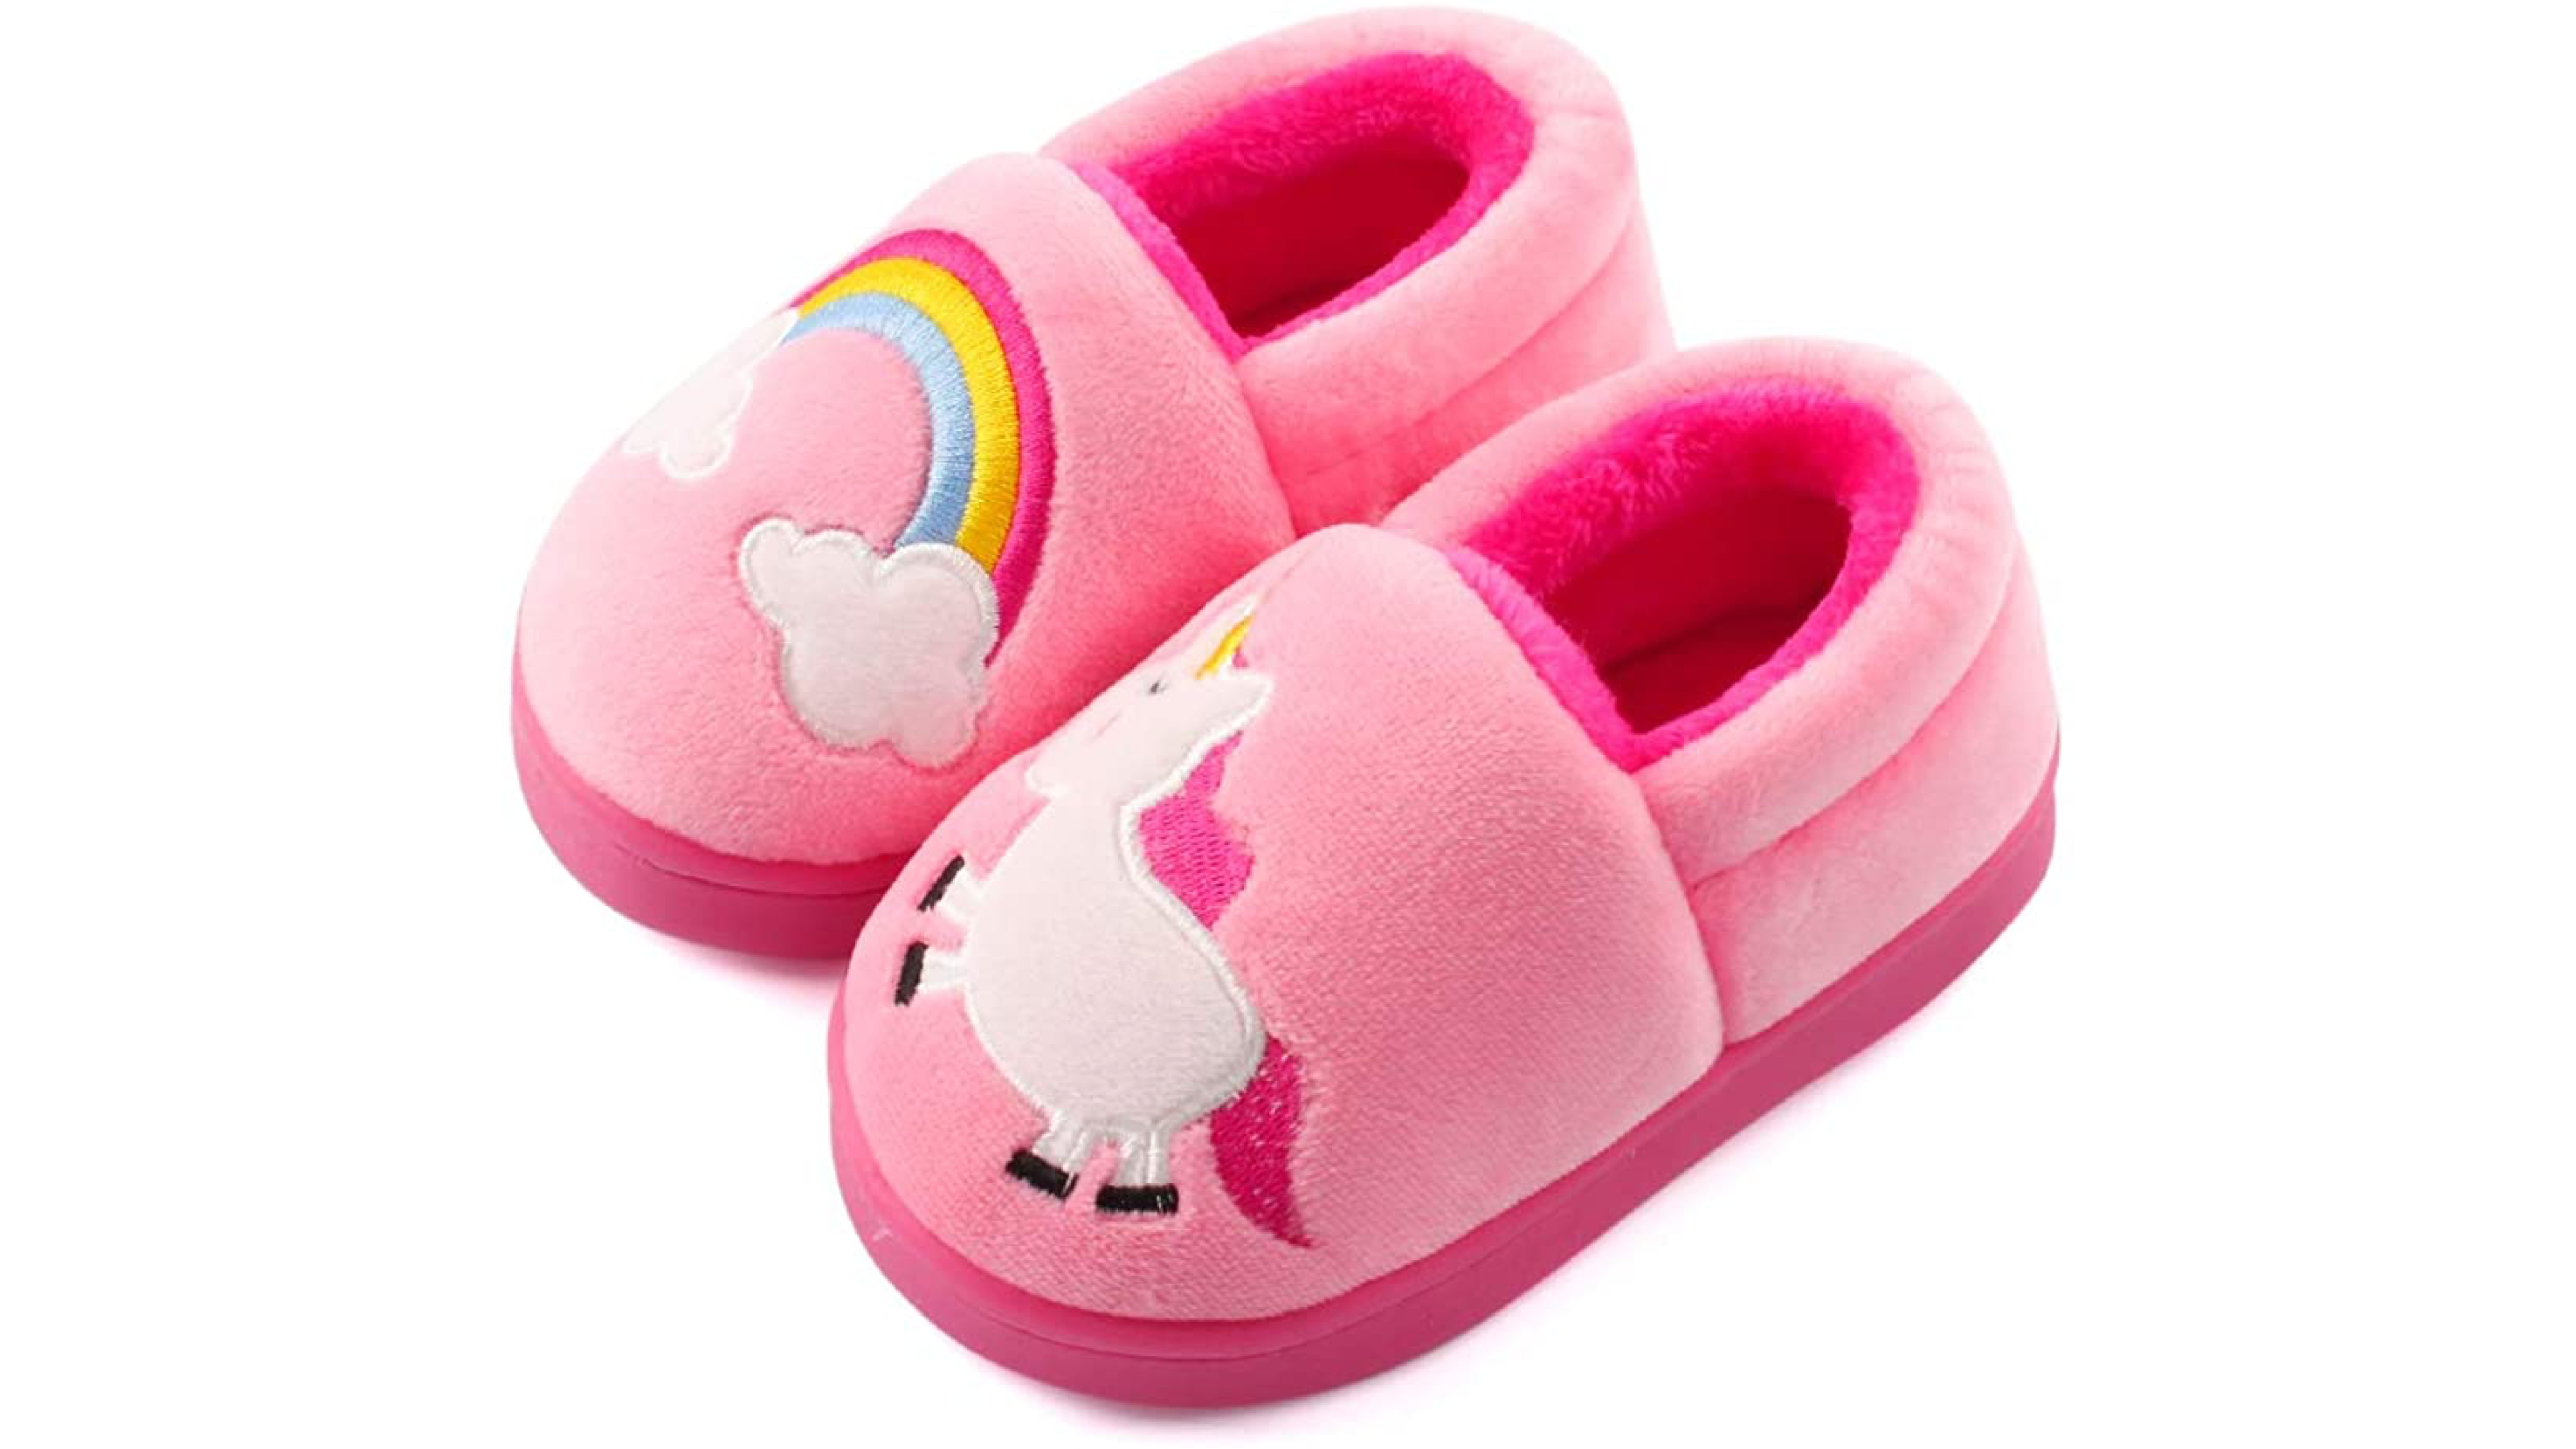 Cartoon pink slippers